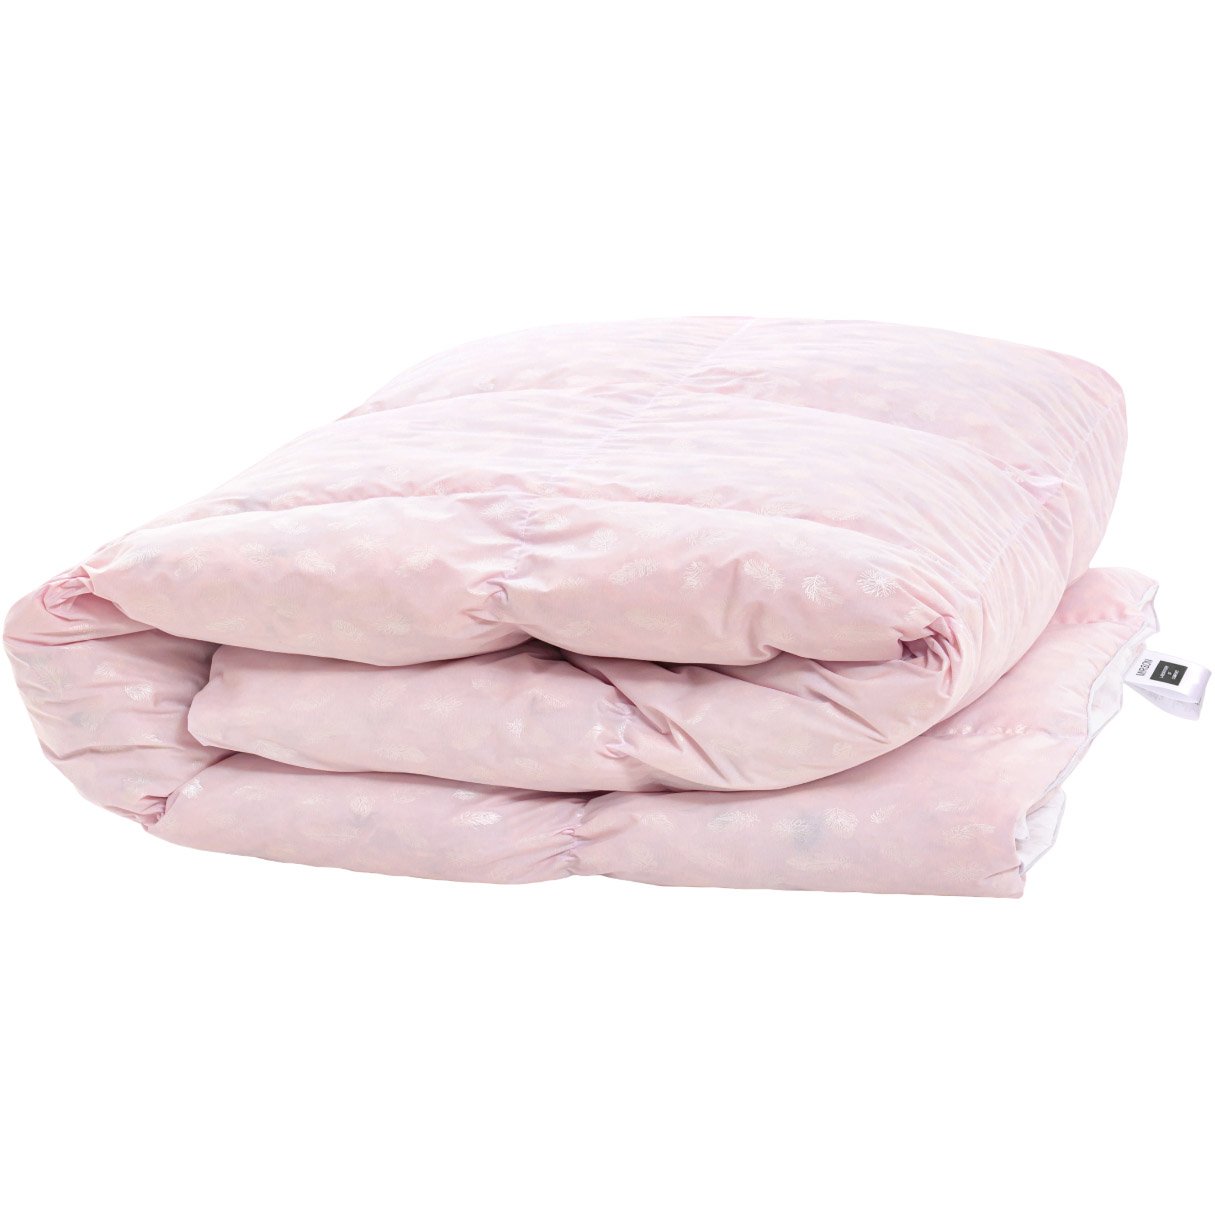 Одеяло пуховое MirSon Karmen №1844 Bio-Pink, 50% пух, полуторное, 205x140, розовое (2200003013818) - фото 1